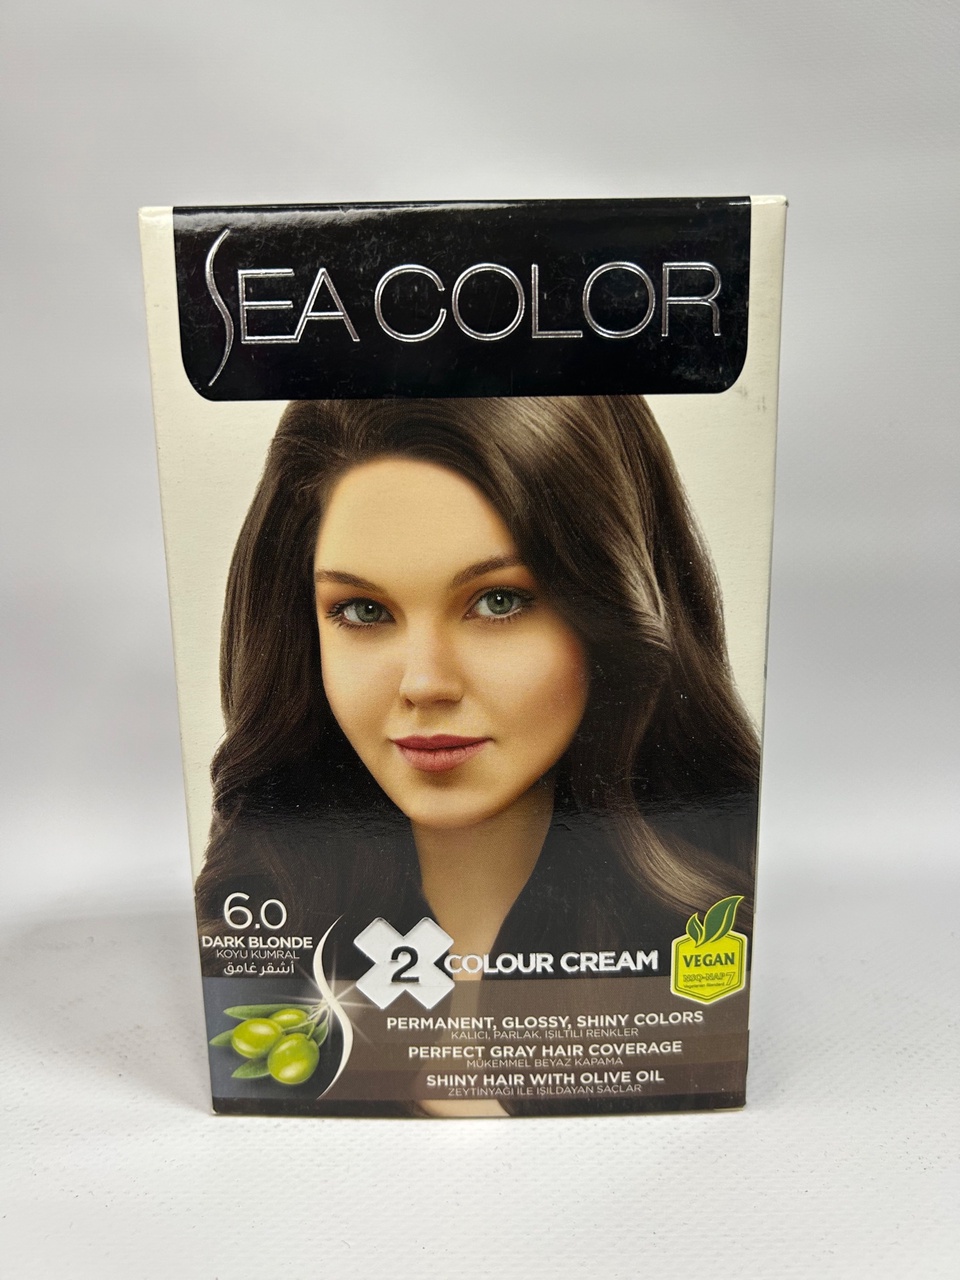 Sea Color 6.0 Краска д/волос «Темно-русый» - 300 ₽, заказать онлайн.